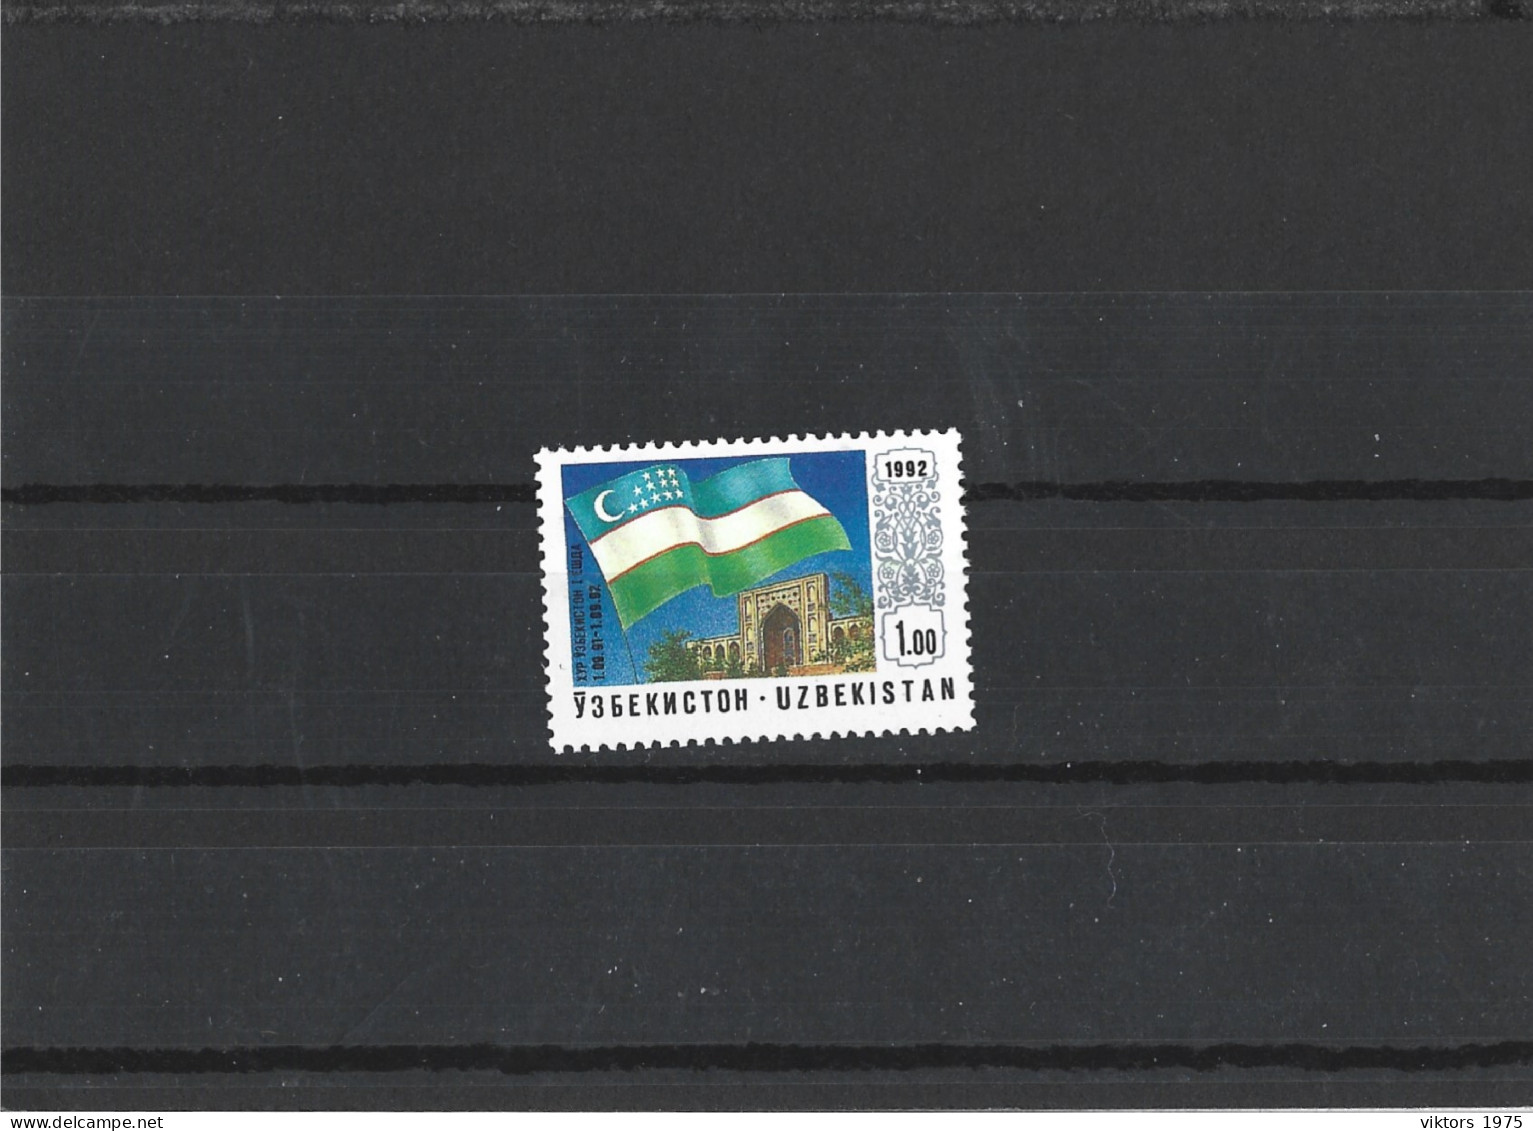 MNH Stamp Nr.3 In MICHEL Catalog - Usbekistan